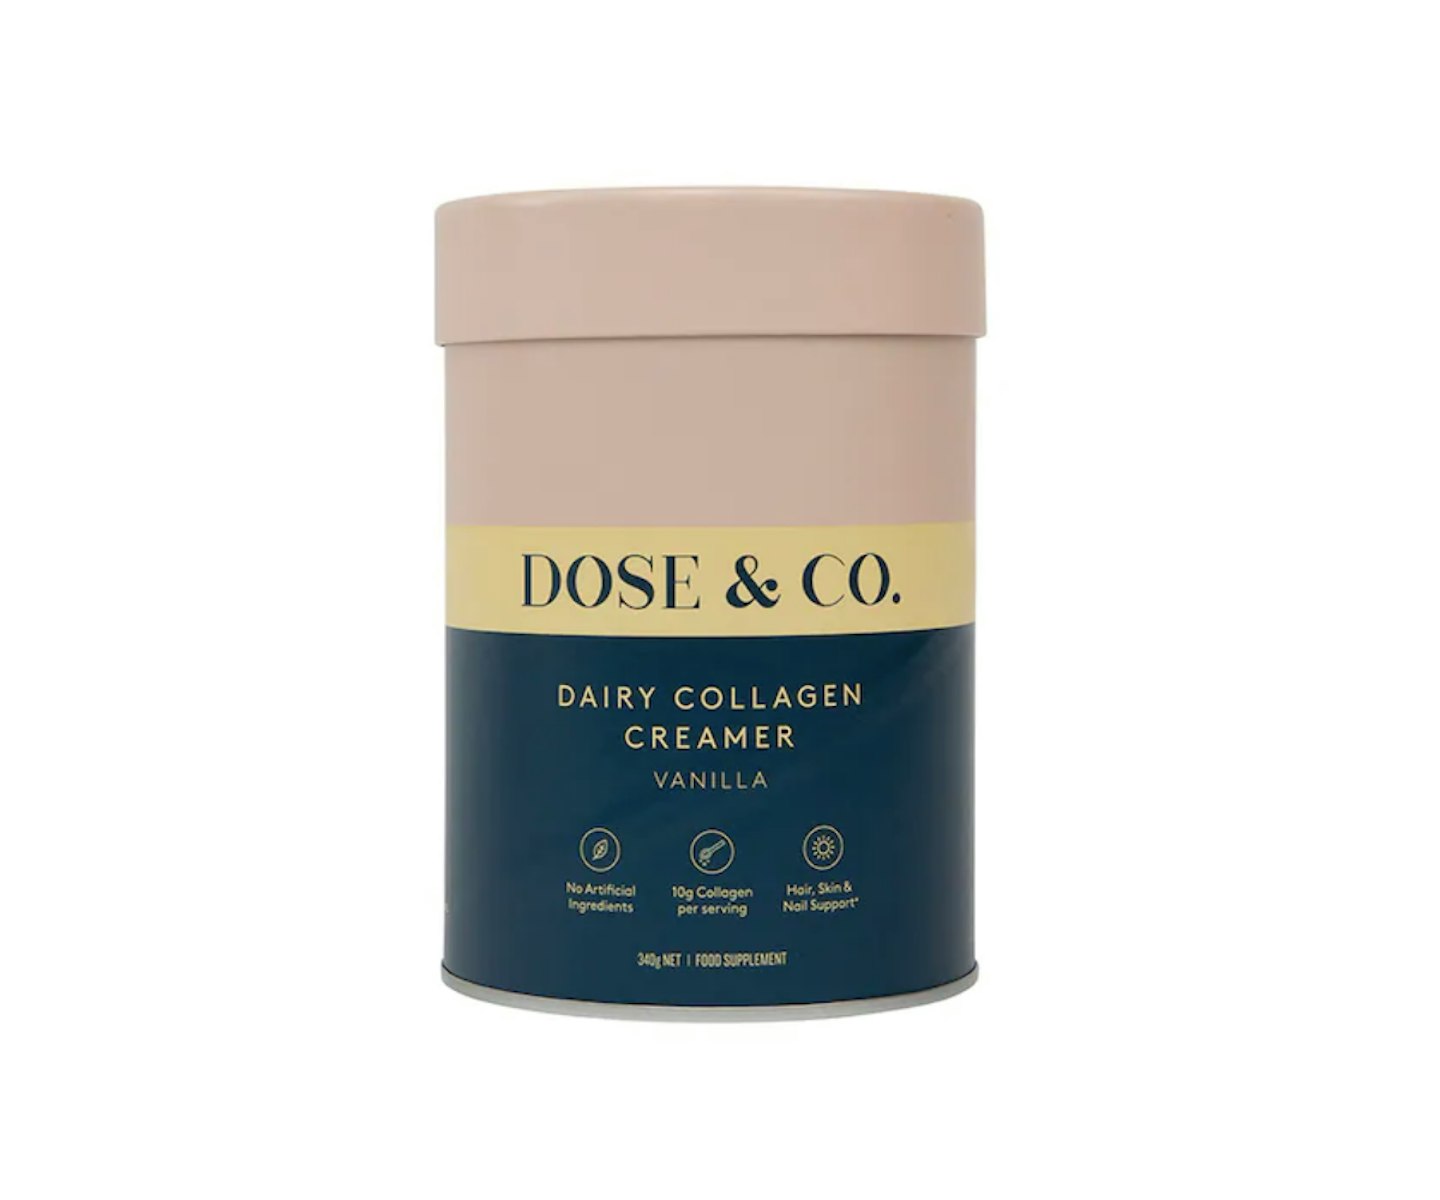 Dose & Co Dairy Collagen Creamer Vanilla